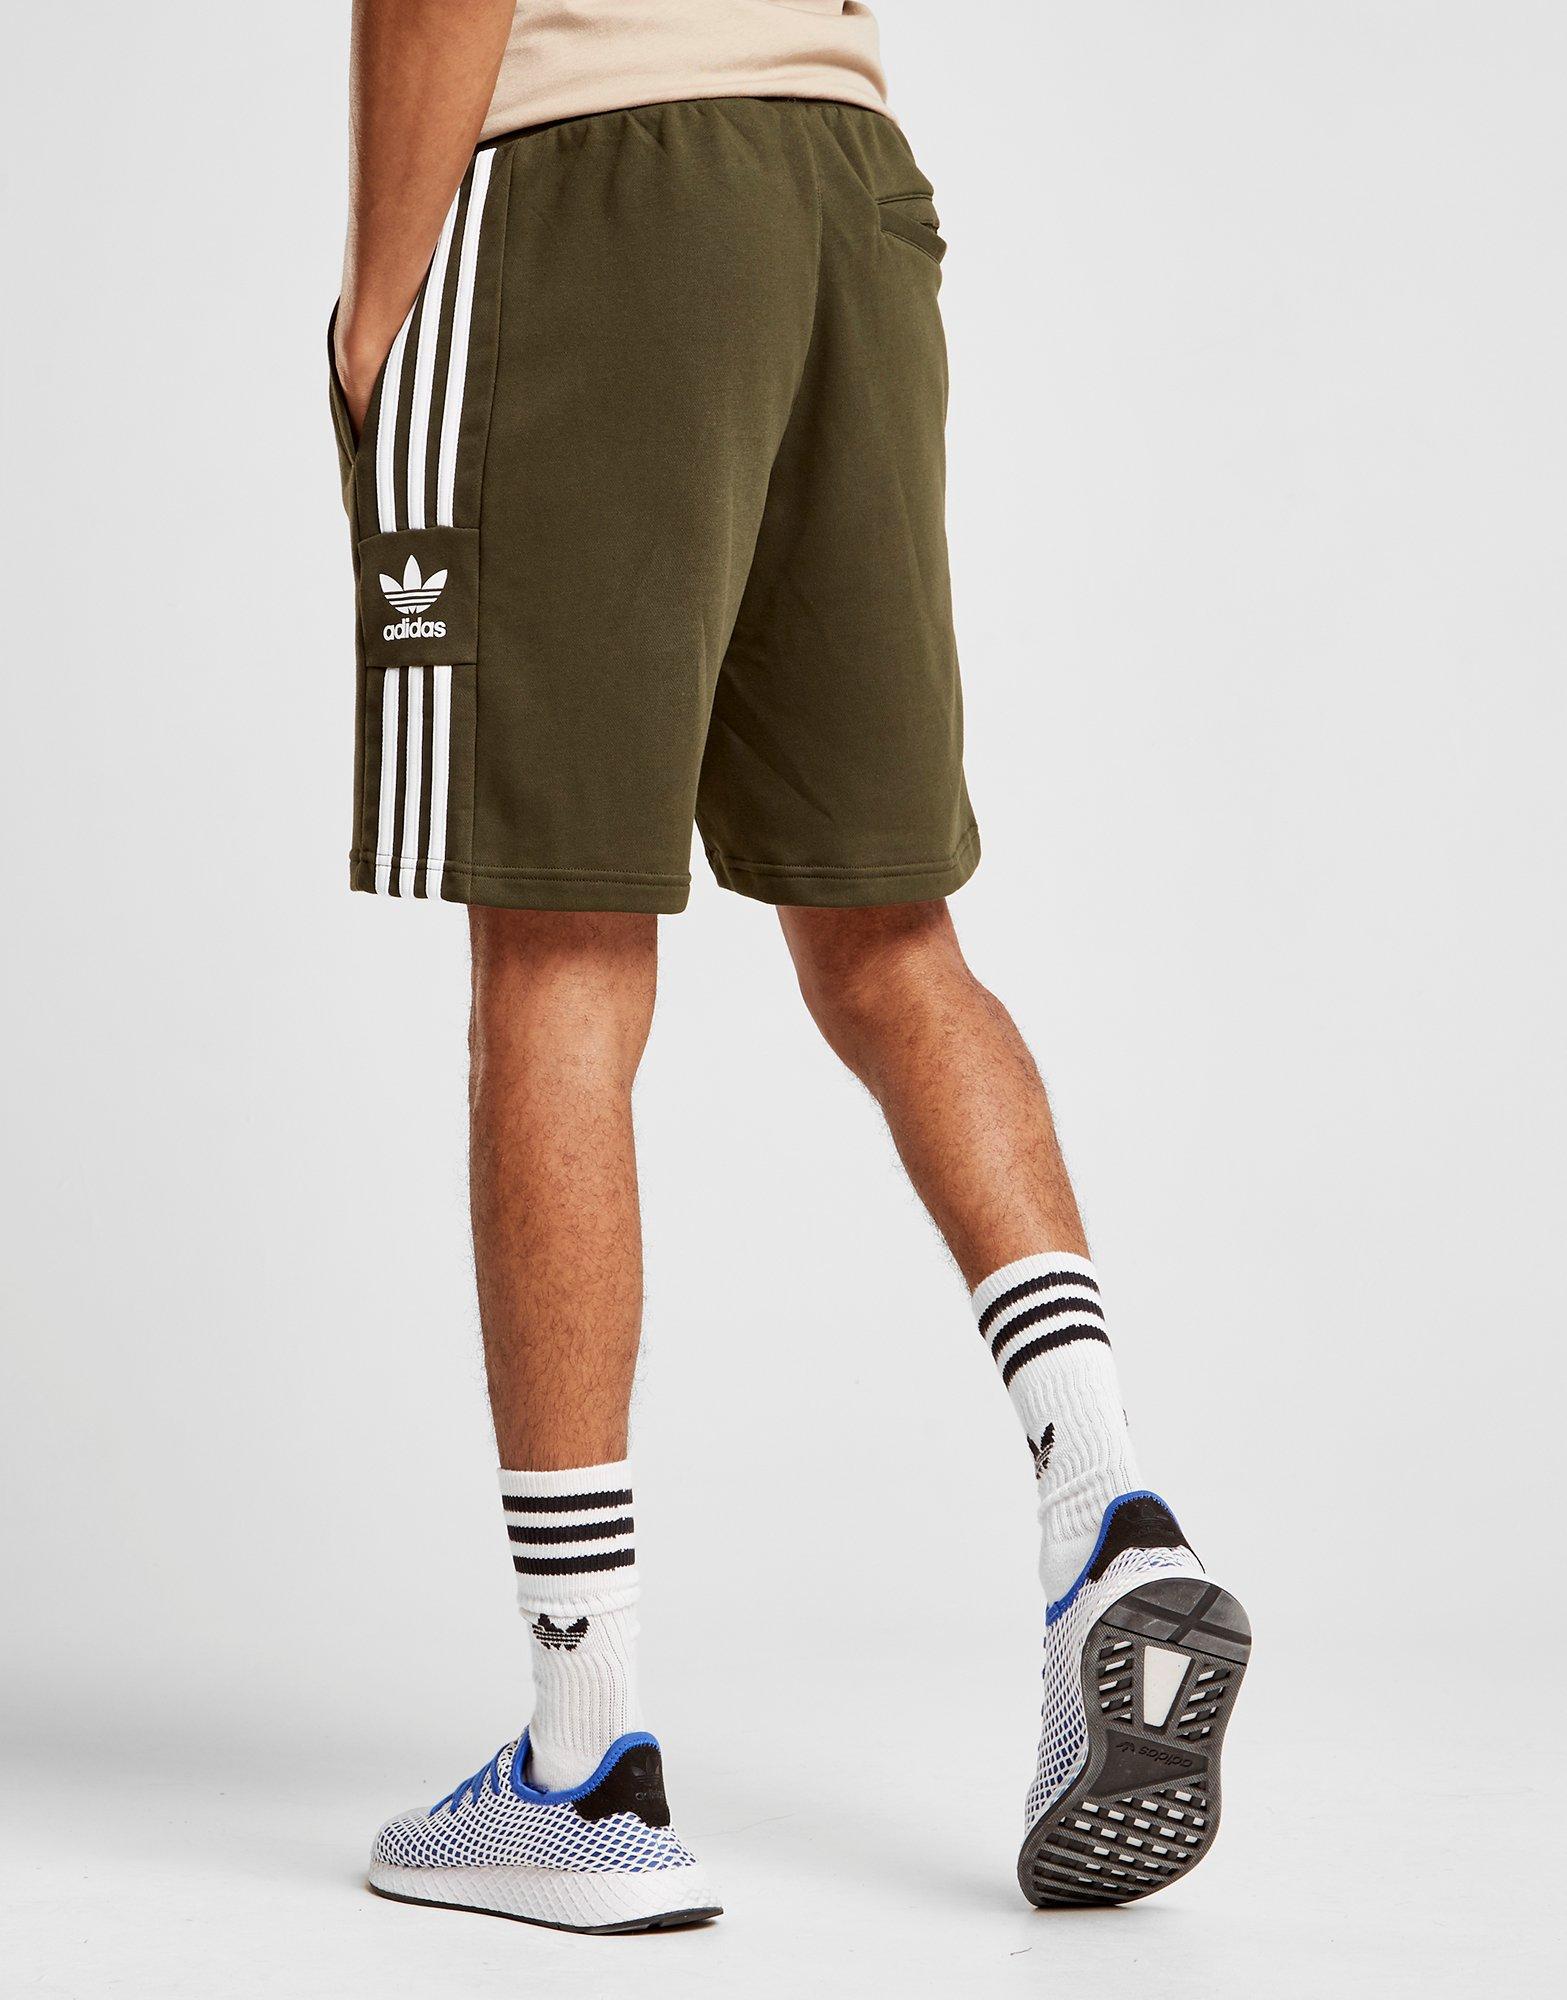 adidas Originals Cotton Id96 Shorts for 